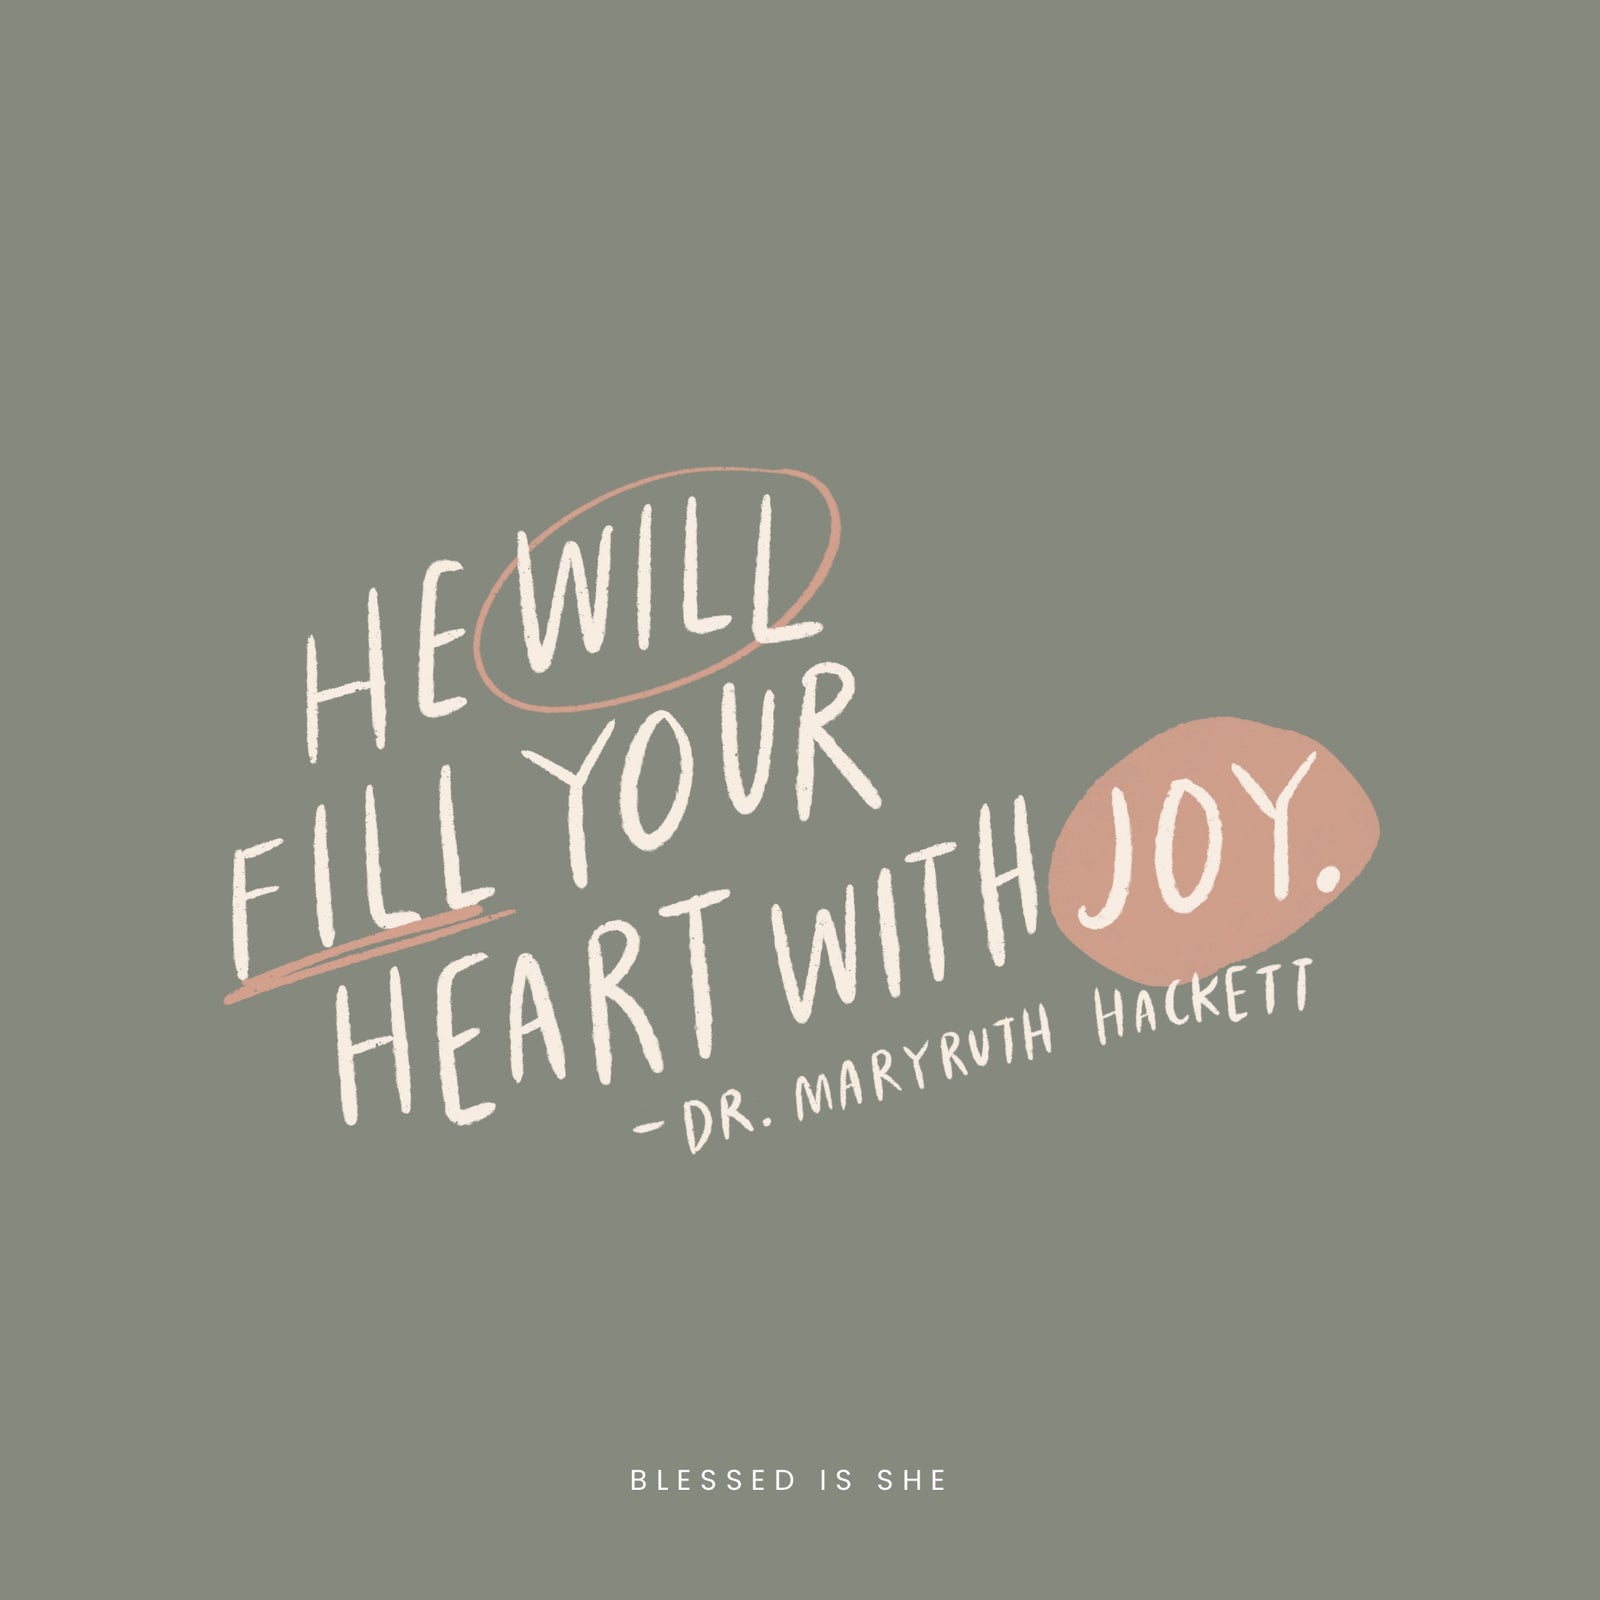 Working on a More Joyful Heart